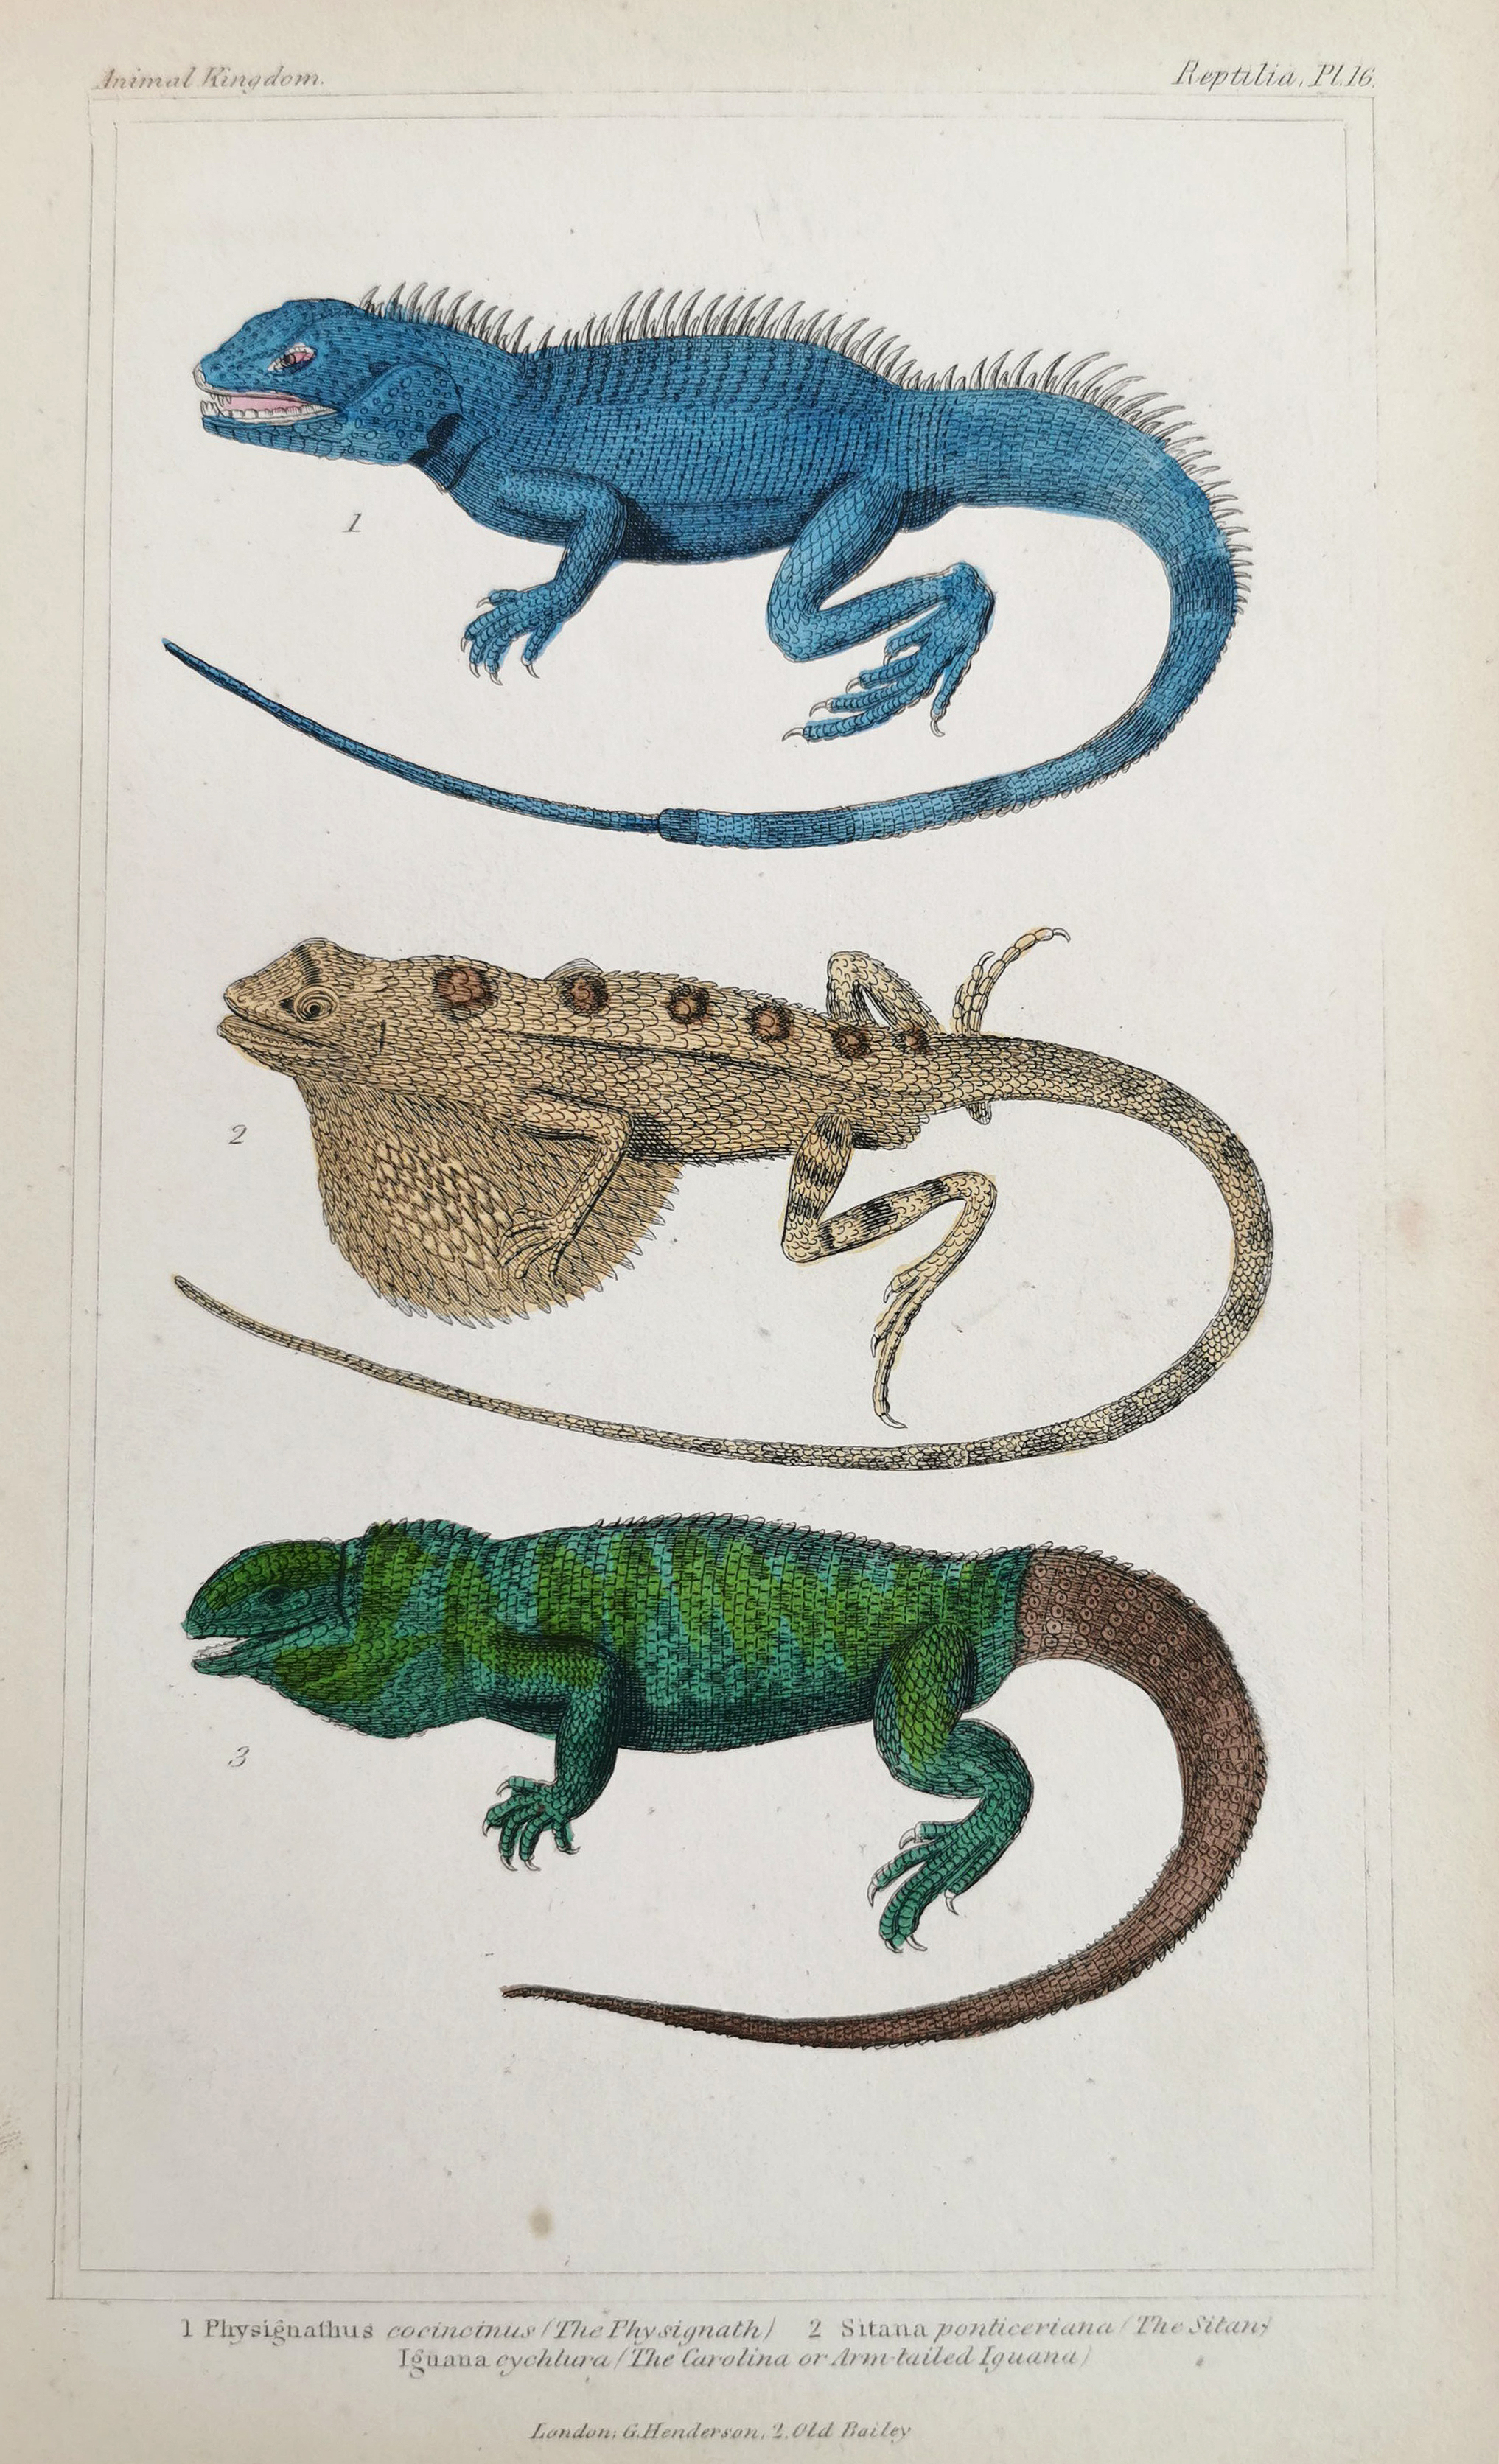 1. Physignathus Cocincinus (The Physignath) 2. Sitana Ponticeriana (The Sitan.) Iguana Cychlura (The Carolina or Arm-tailed Iguana) - Antique Print from 1834